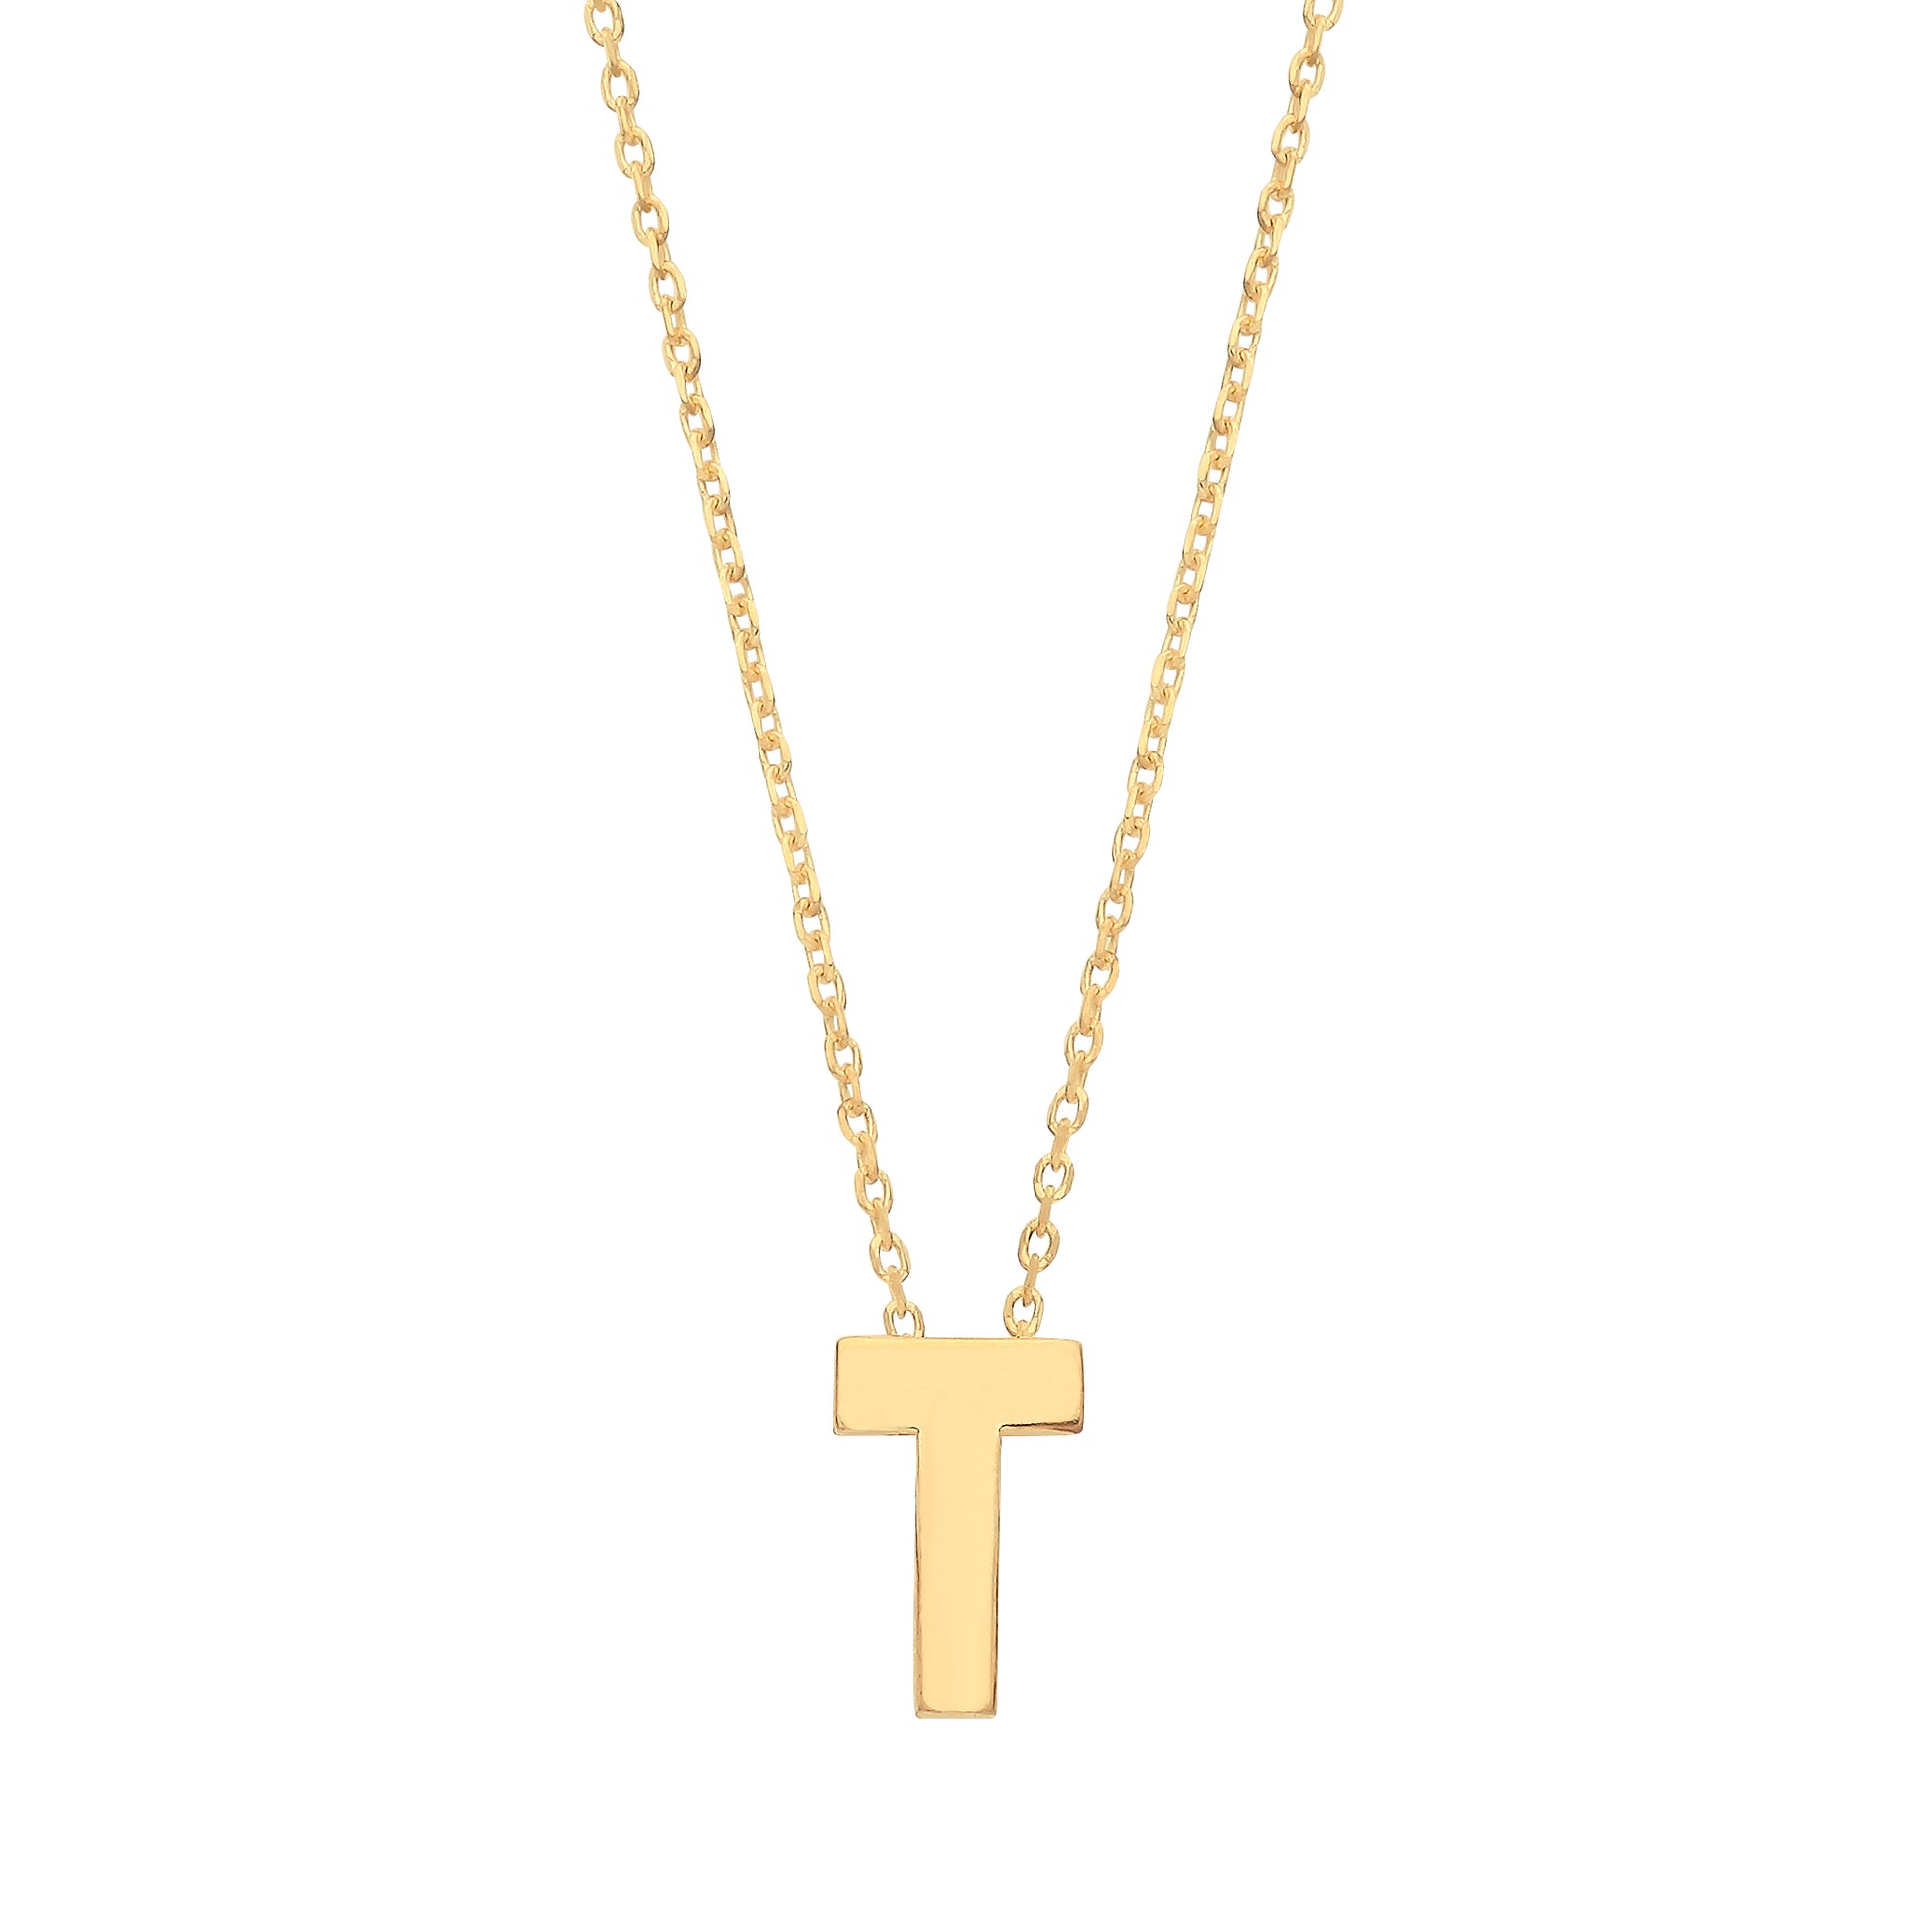 9ct Gold  Letter T Initial Pendant Necklace 17 inch 43cm - G9P6032T